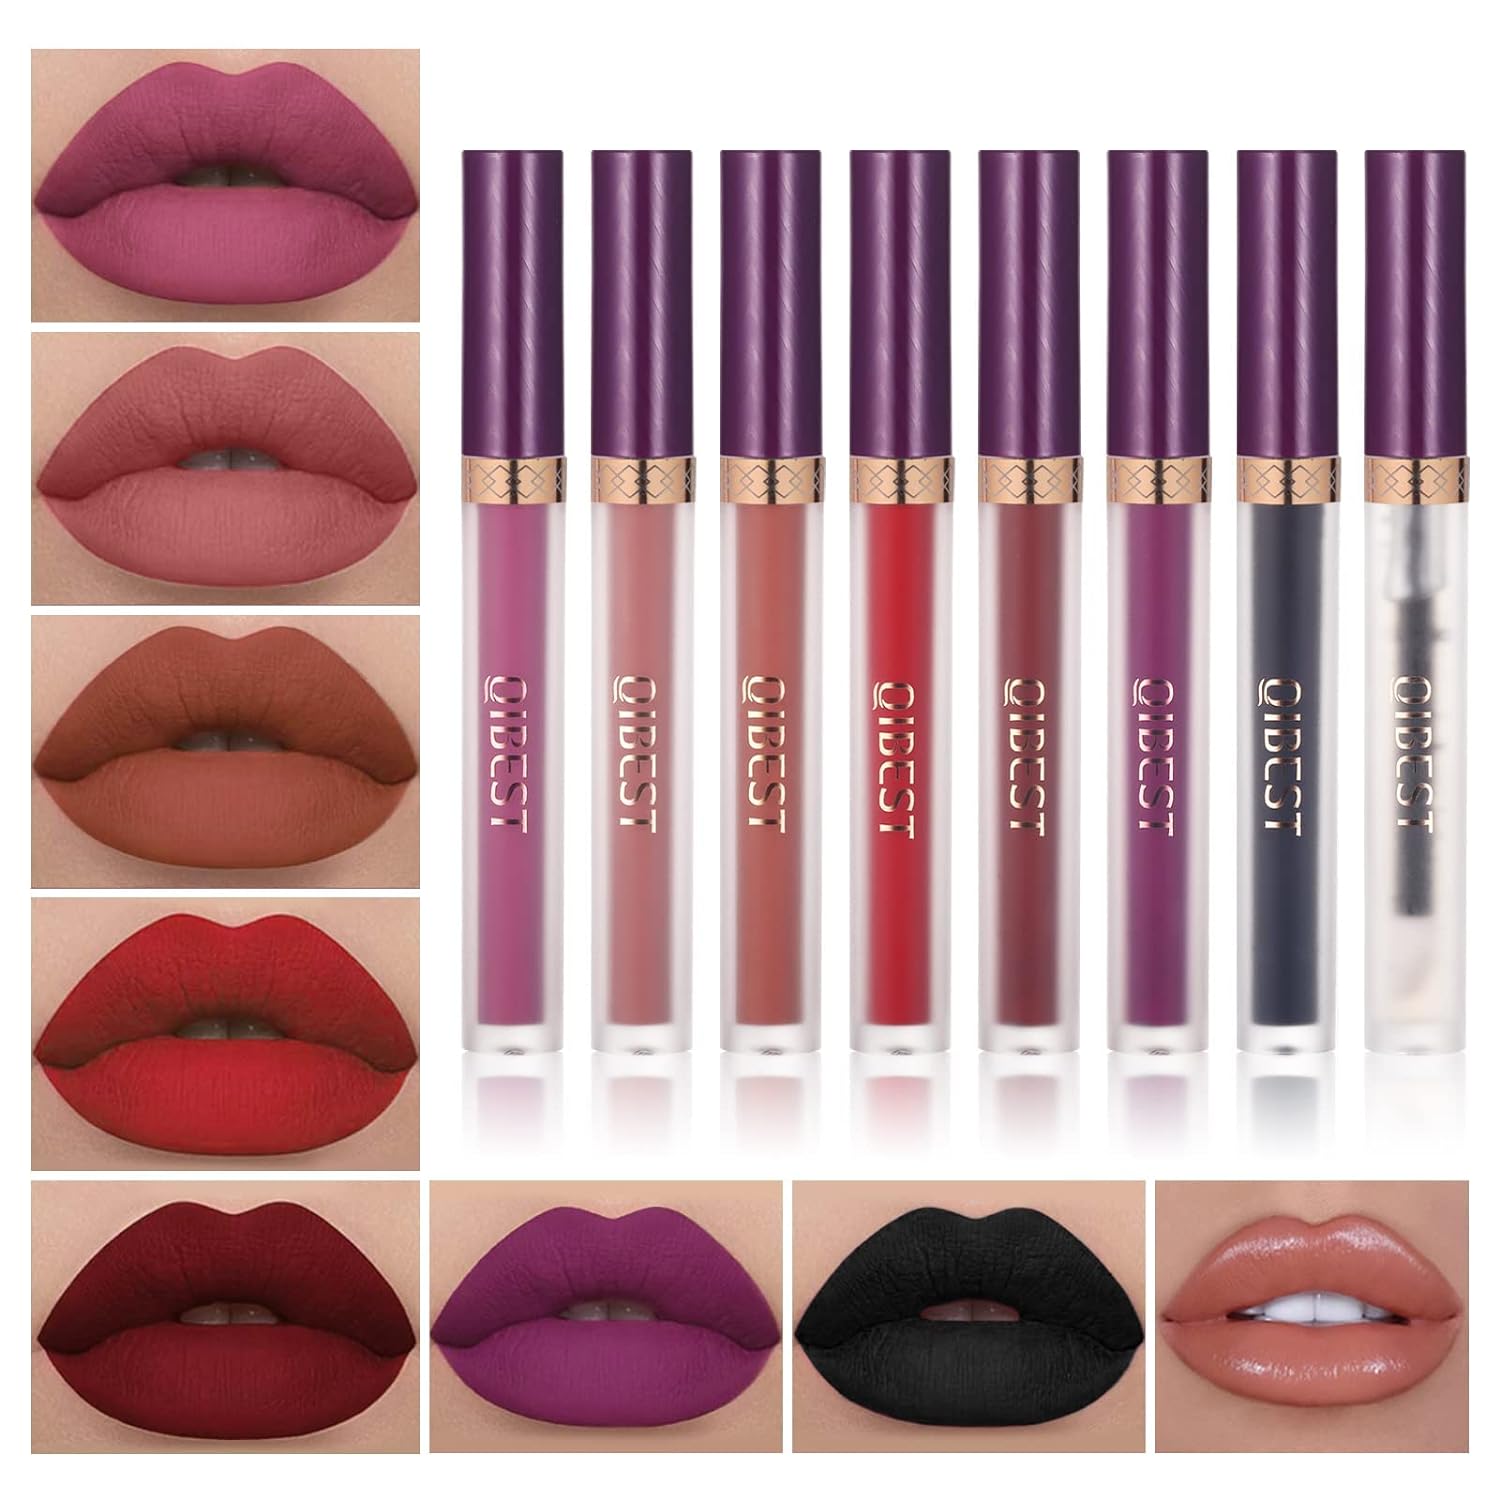 Wholesale Waterproof Nude Lip gloss Pigment Glossy liquid Lipstick